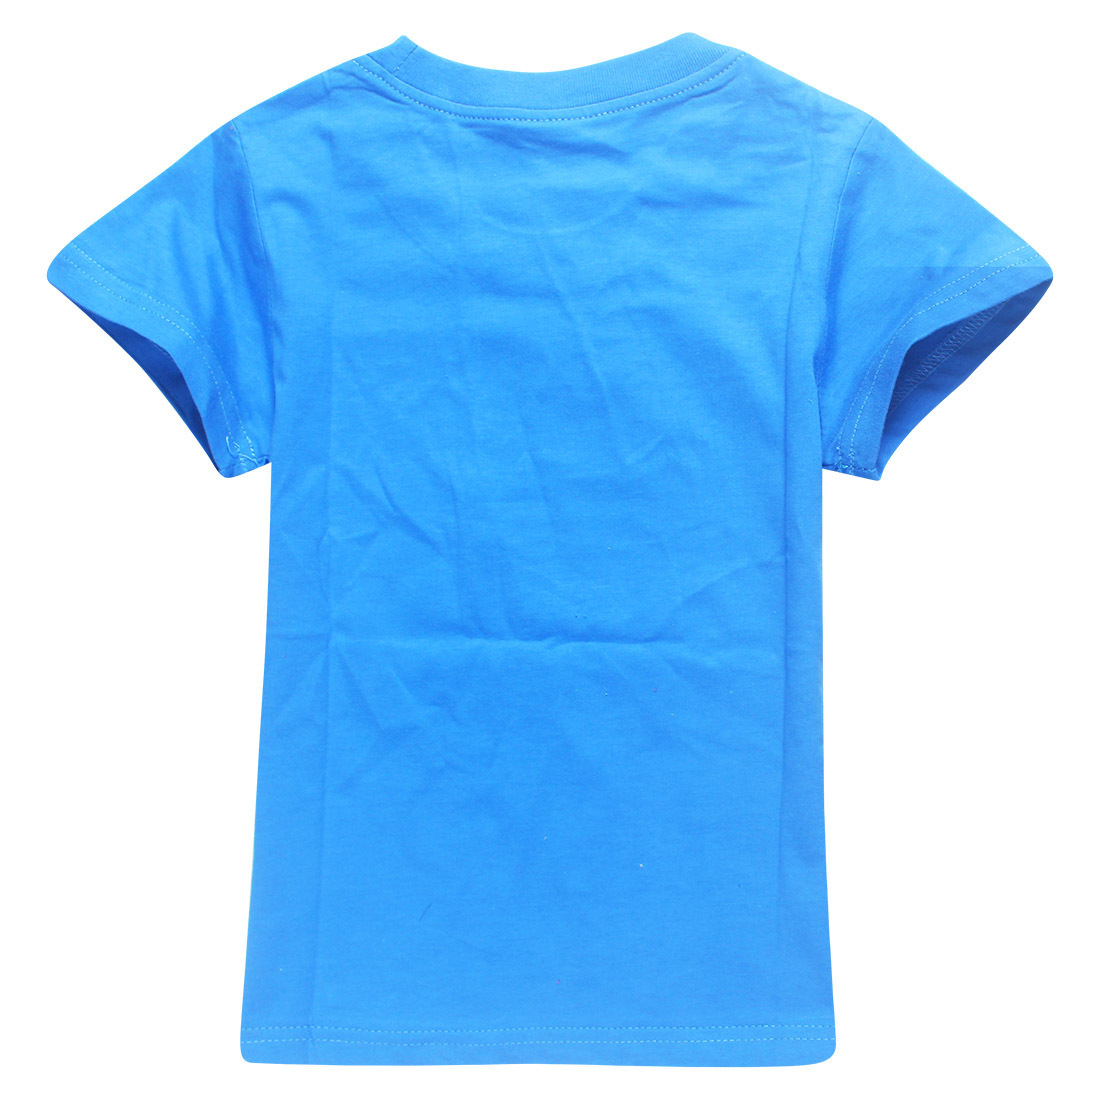 Kids Roblox T Shirt Gap - Roblox Promo Codes 2020 For Shirts